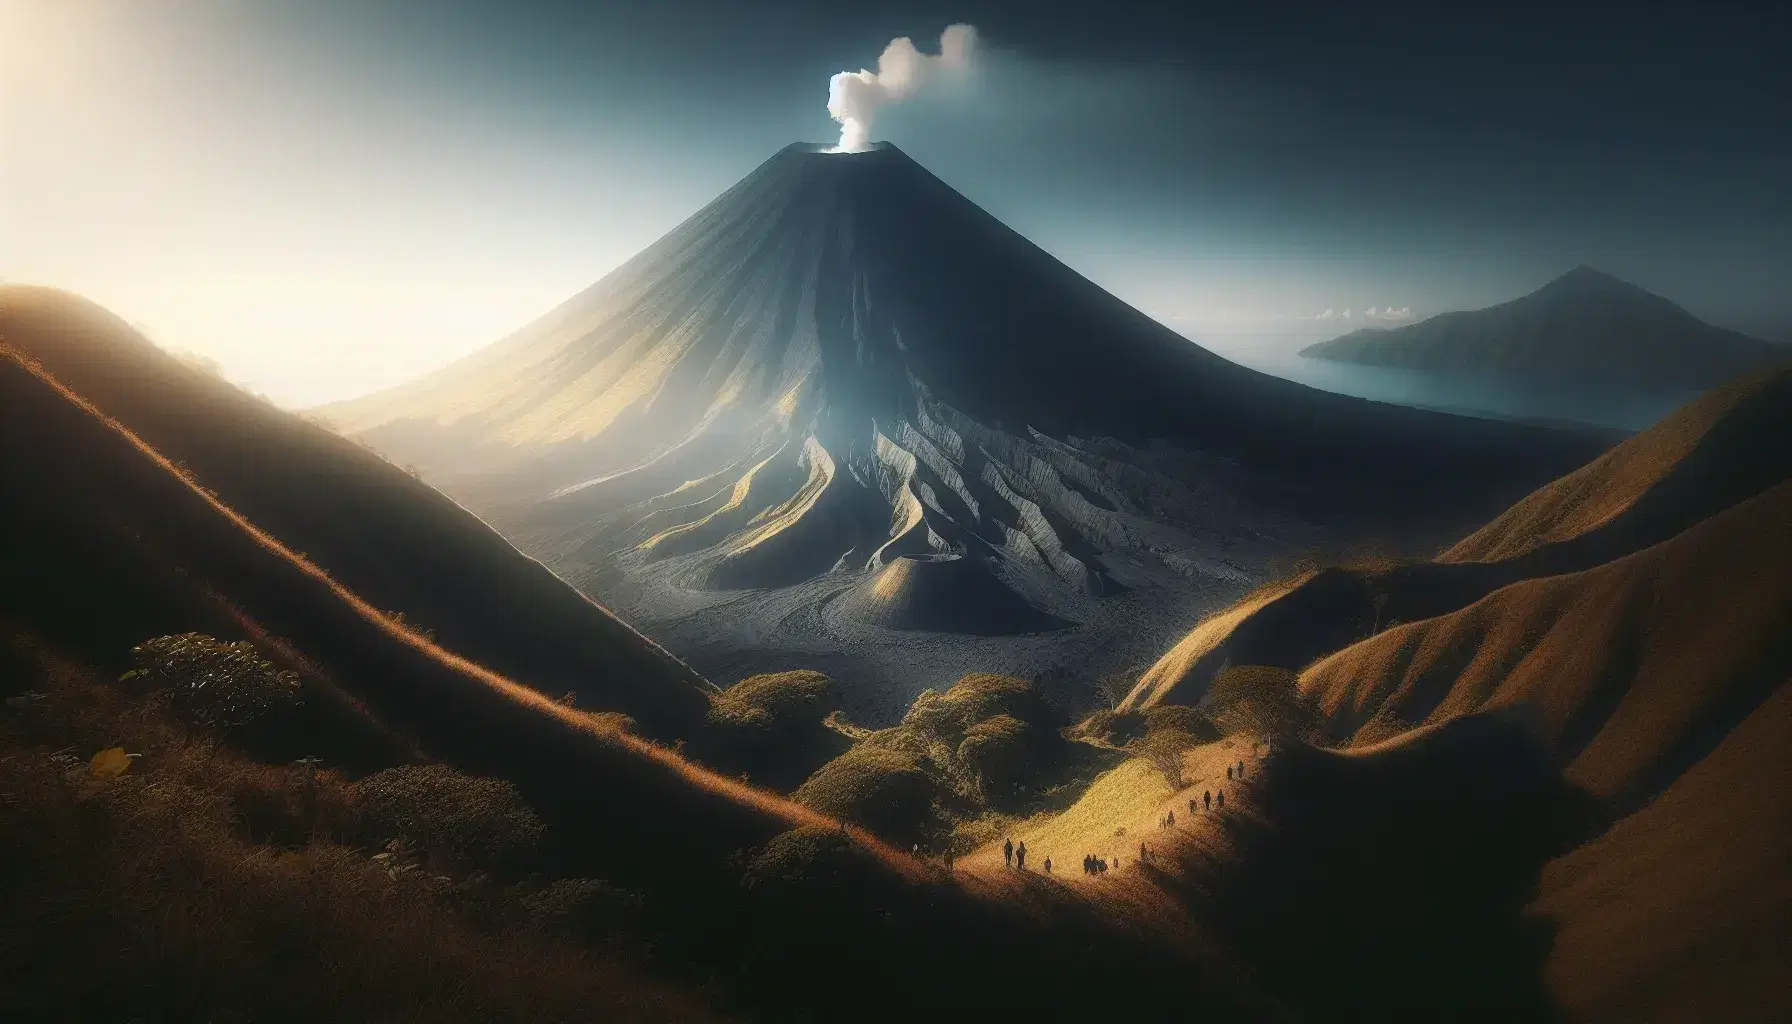 Volcán cono prominente con cráter humeante bajo cielo azul, vegetación densa alrededor y grupo de personas observando a distancia.